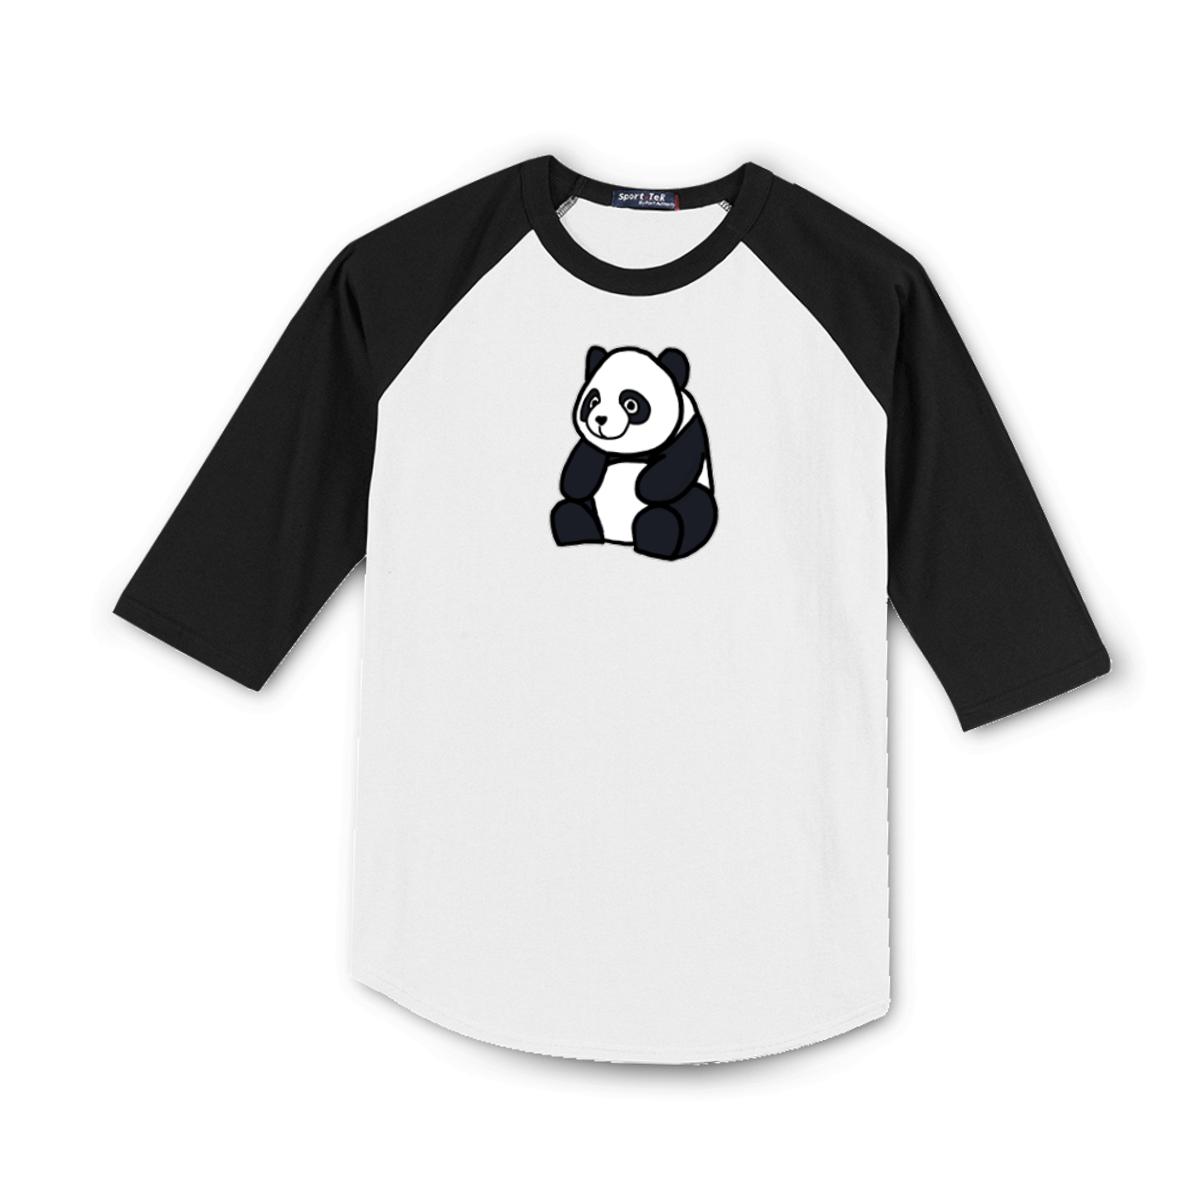 Panda Men's Raglan Tee Small white-black